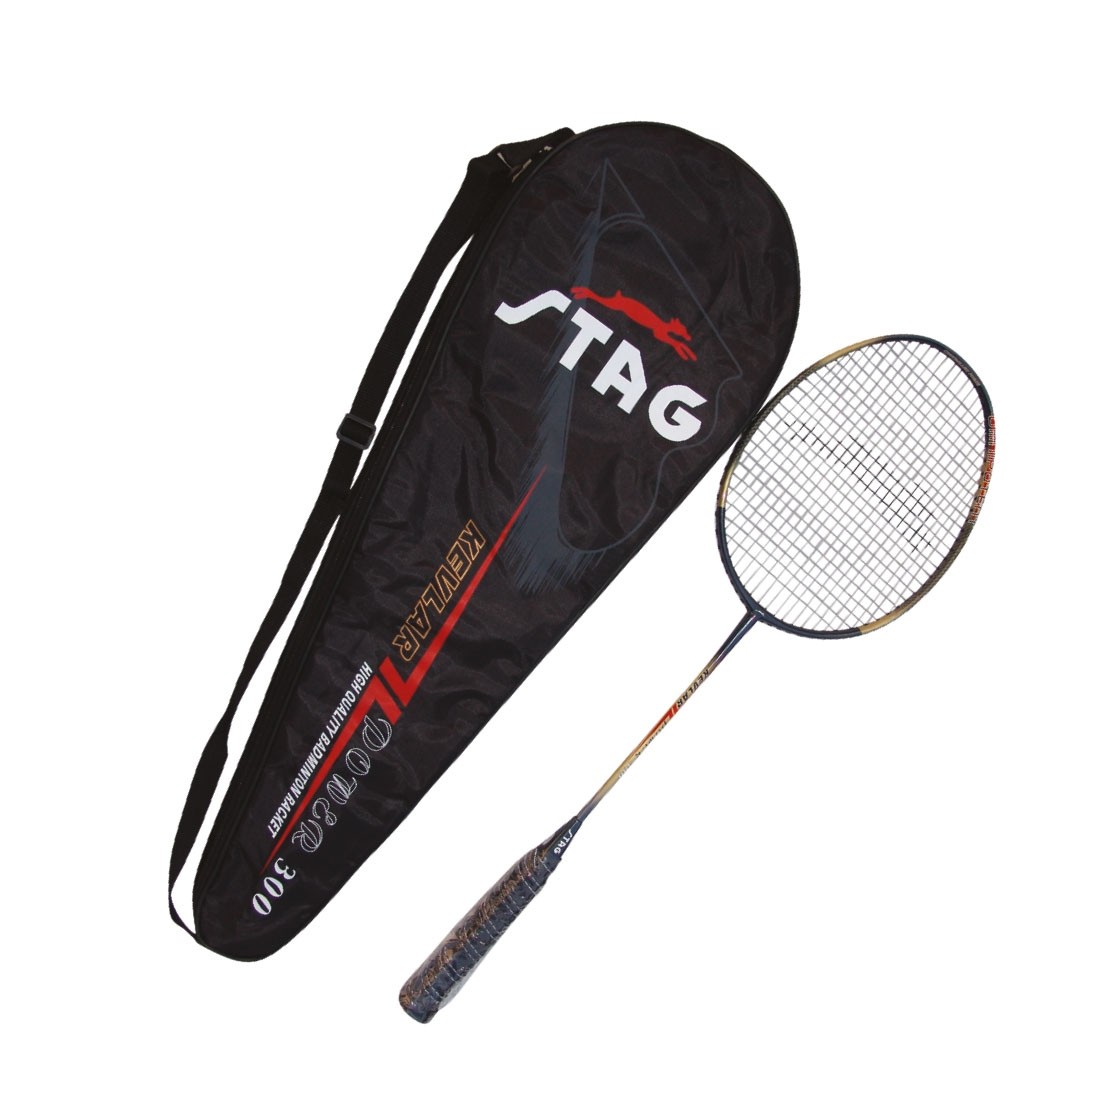 BADMINTON RACKET KEVLAR POWER -300 - Badminton Rackets - Badminton